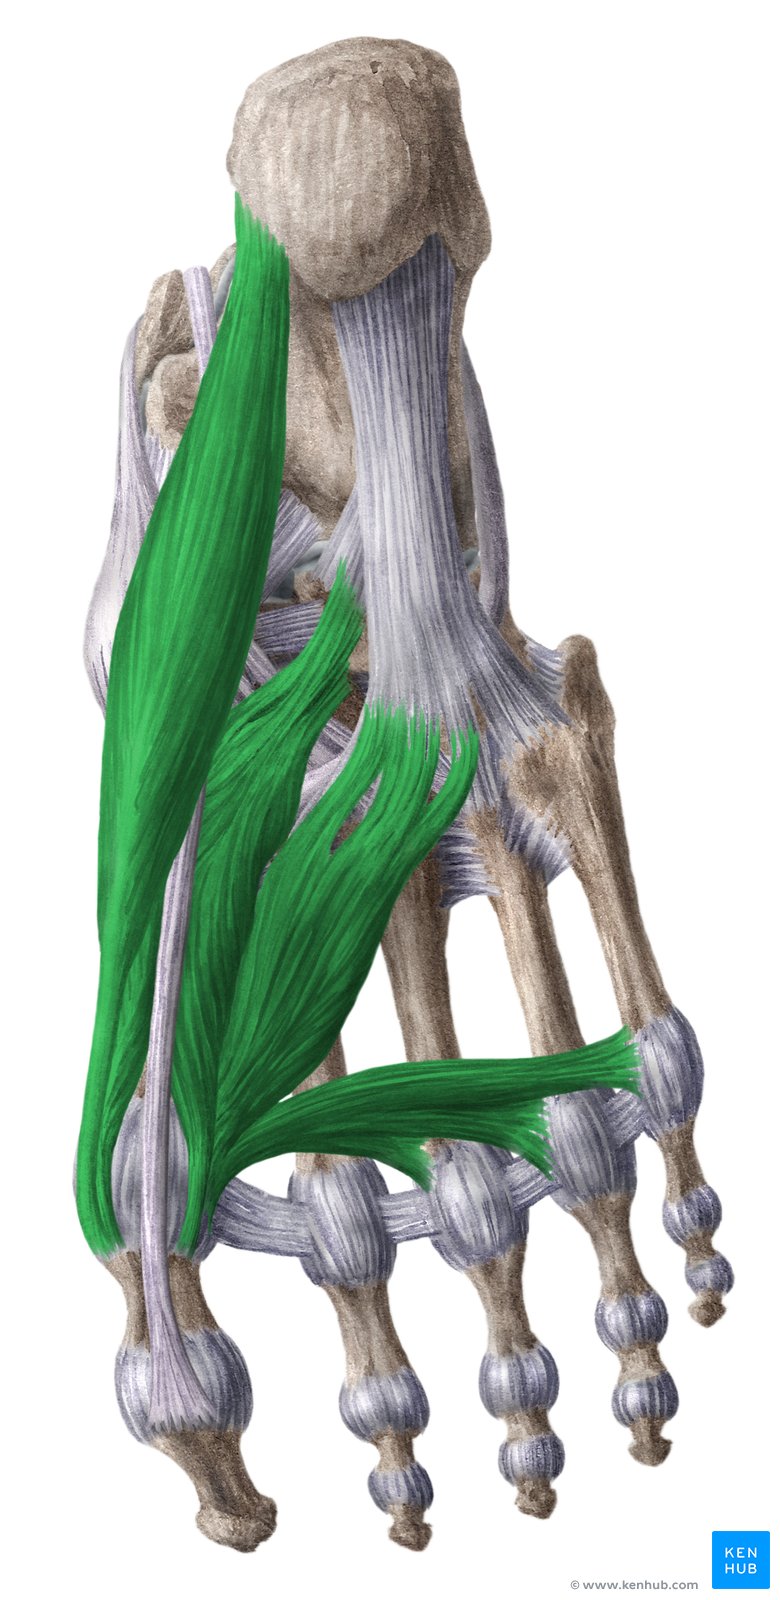 Medial plantar muscles of the foot: Anatomy | Kenhub